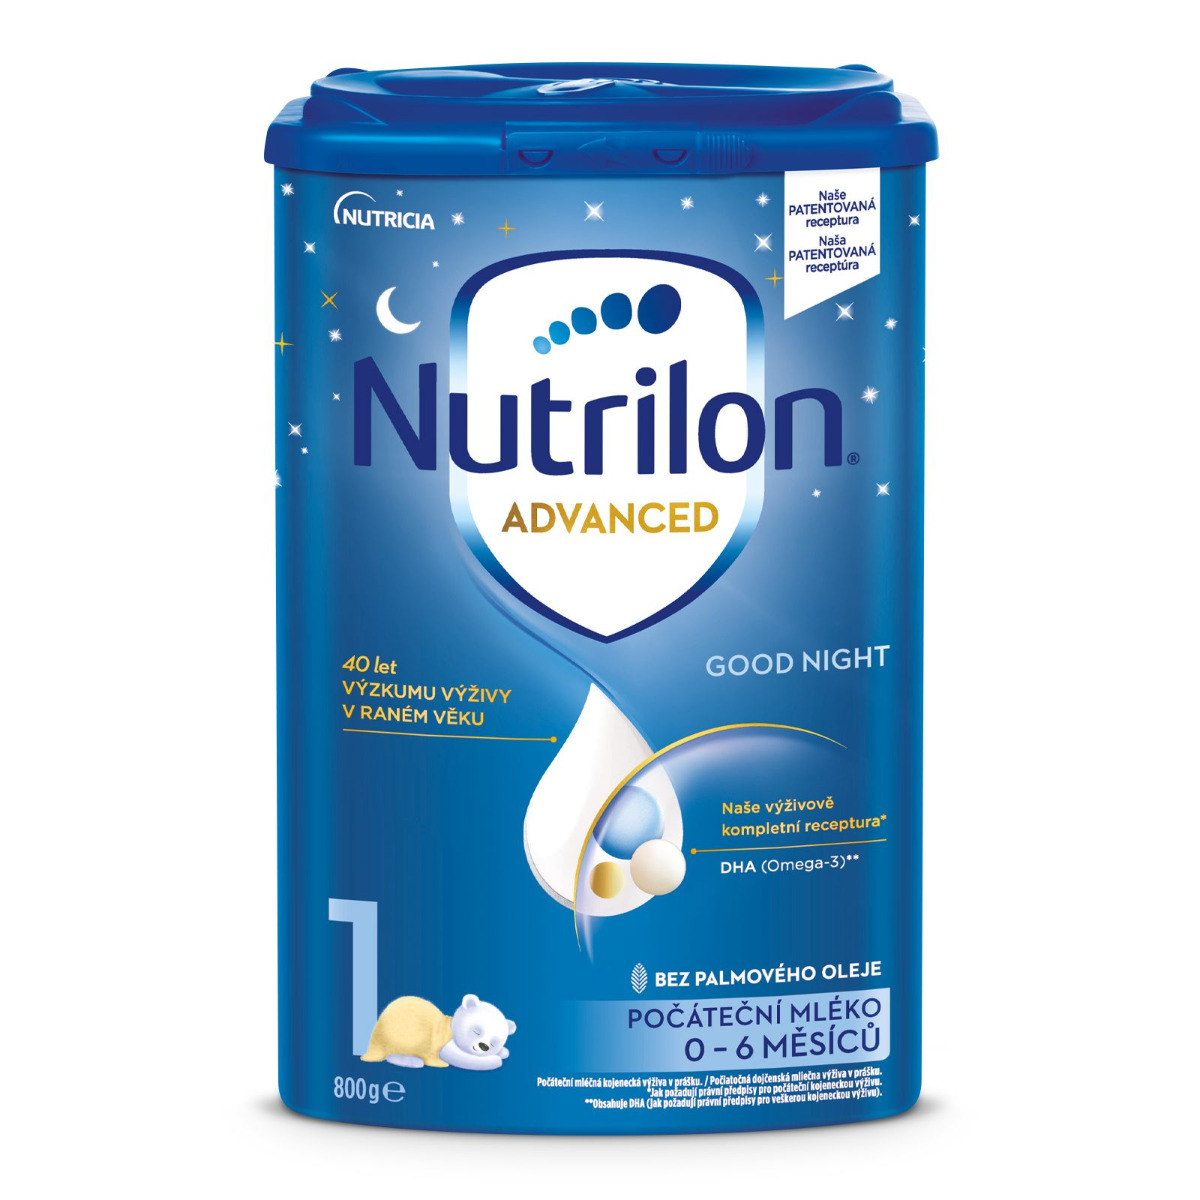 Nutrilon Advanced 1 Good Night 800 g Nutrilon